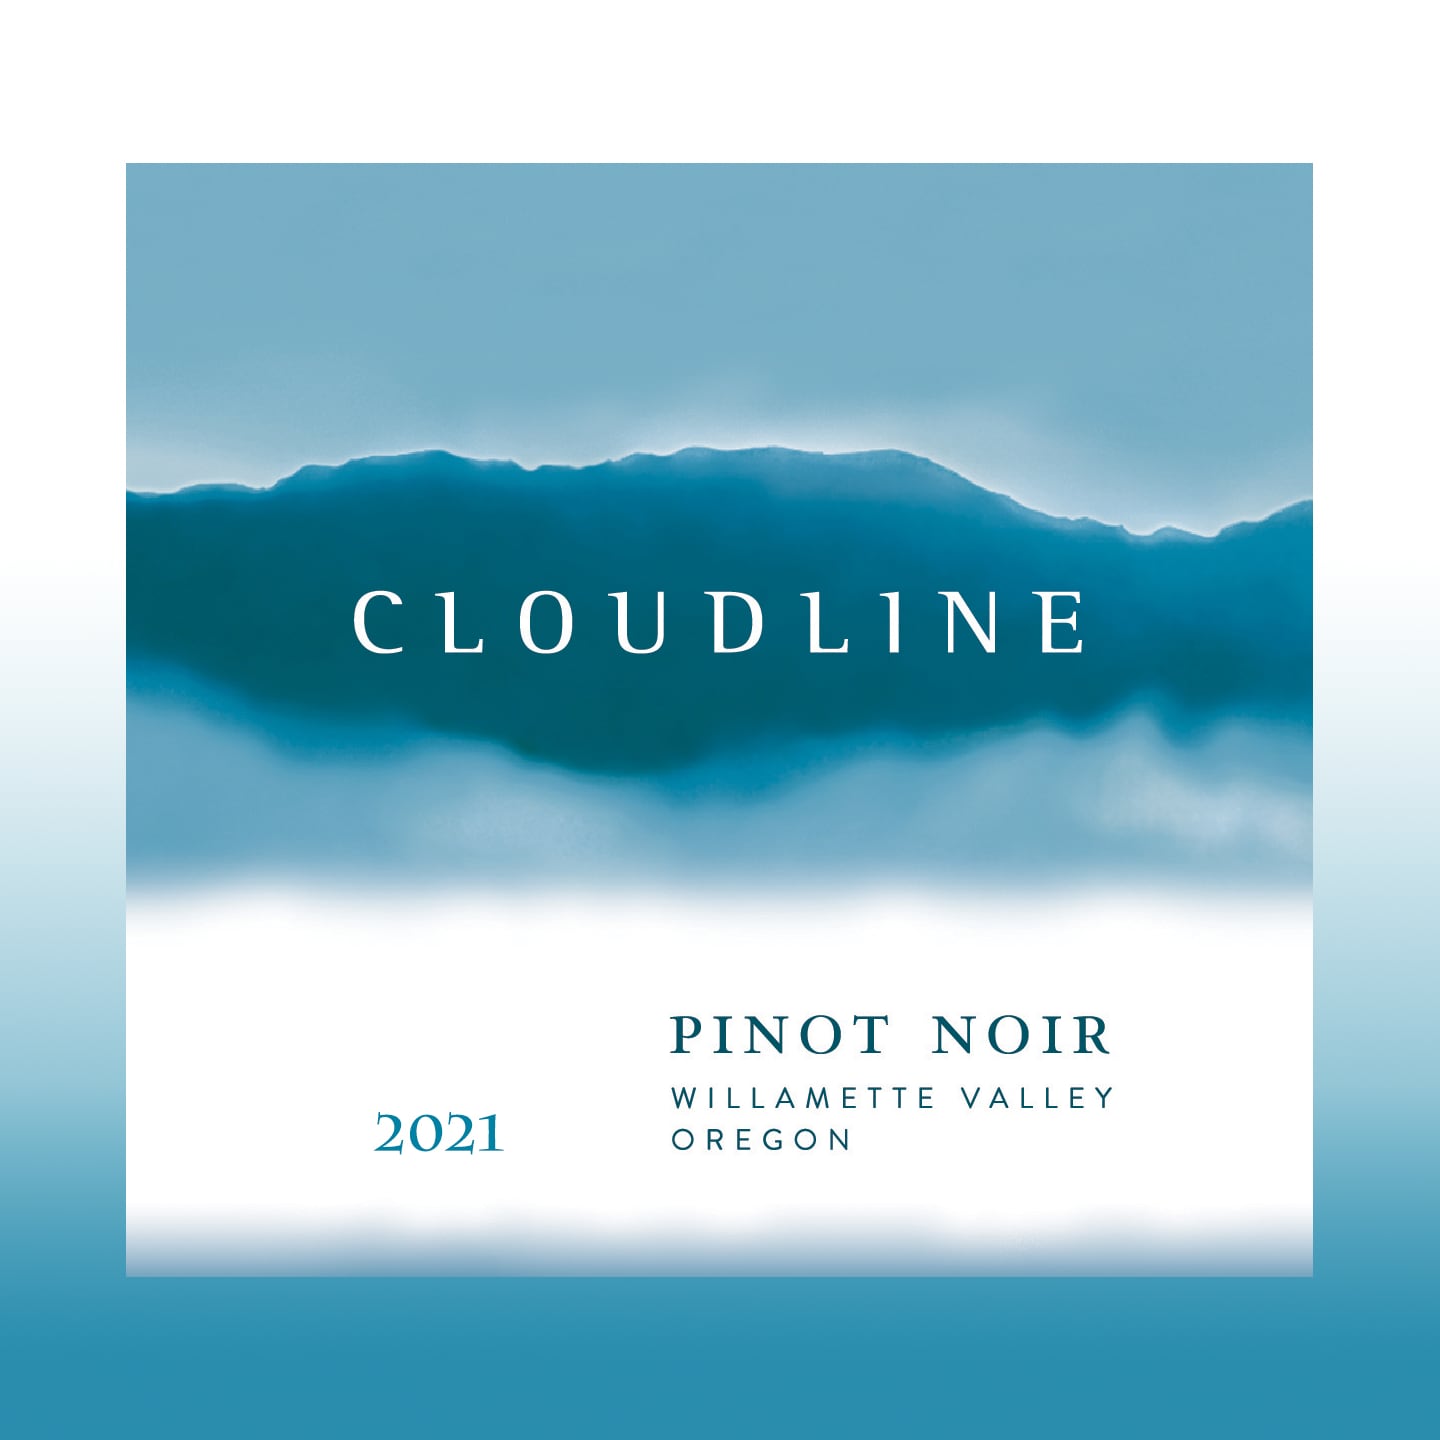 Cloudline Willamette Valley Pinot Noir 2021